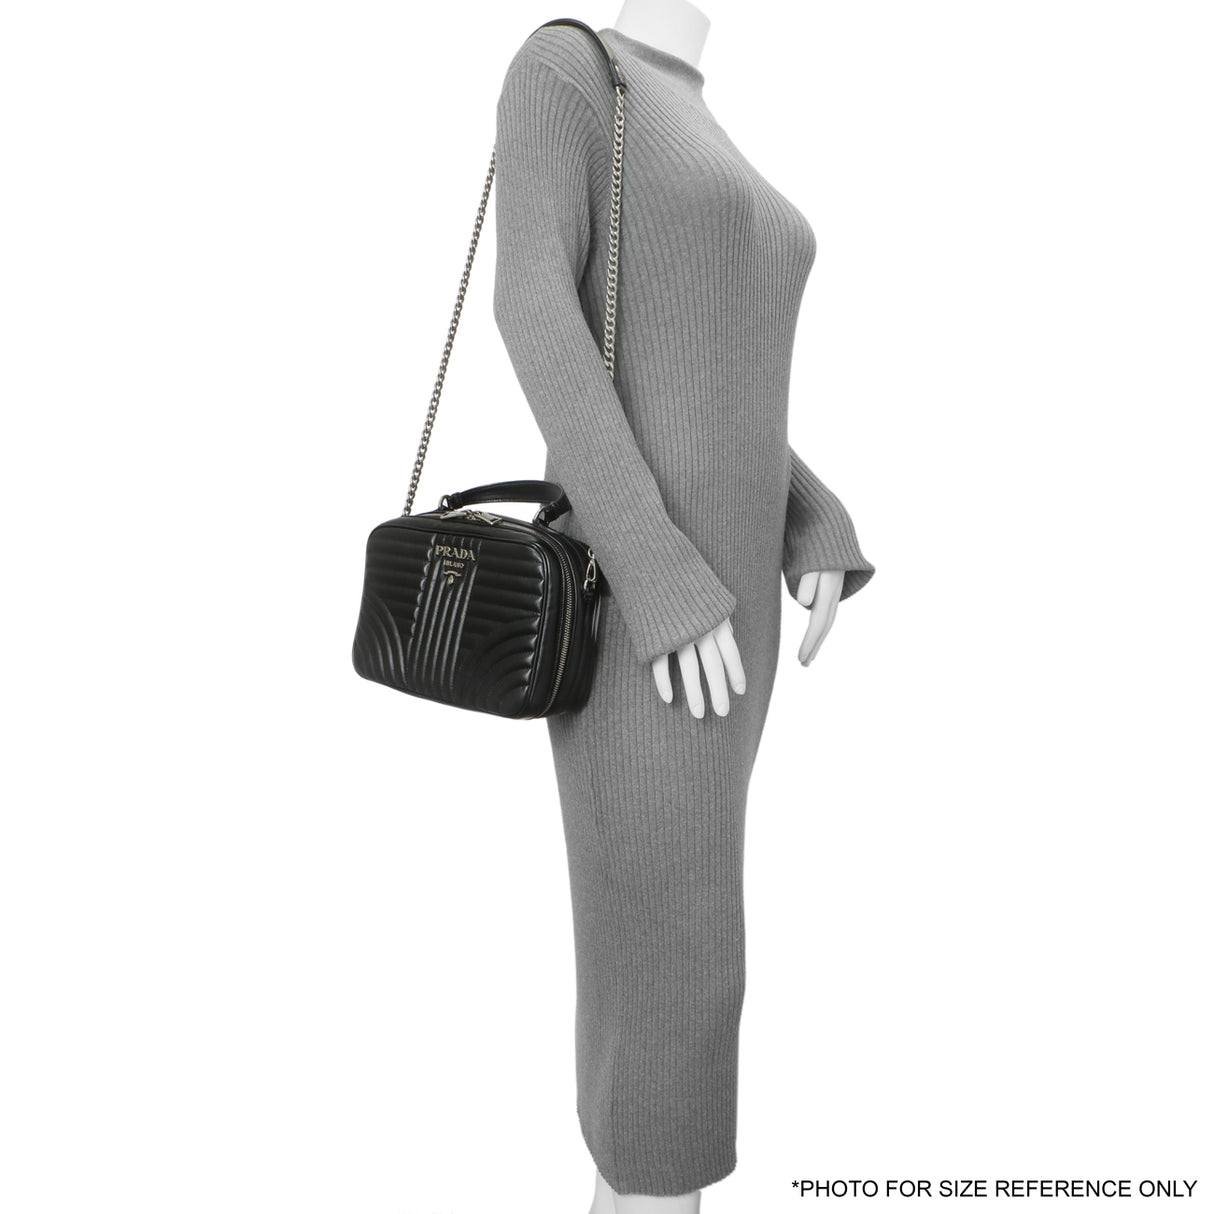 Prada Black Soft Calfskin Diagramme Top Handle Bag